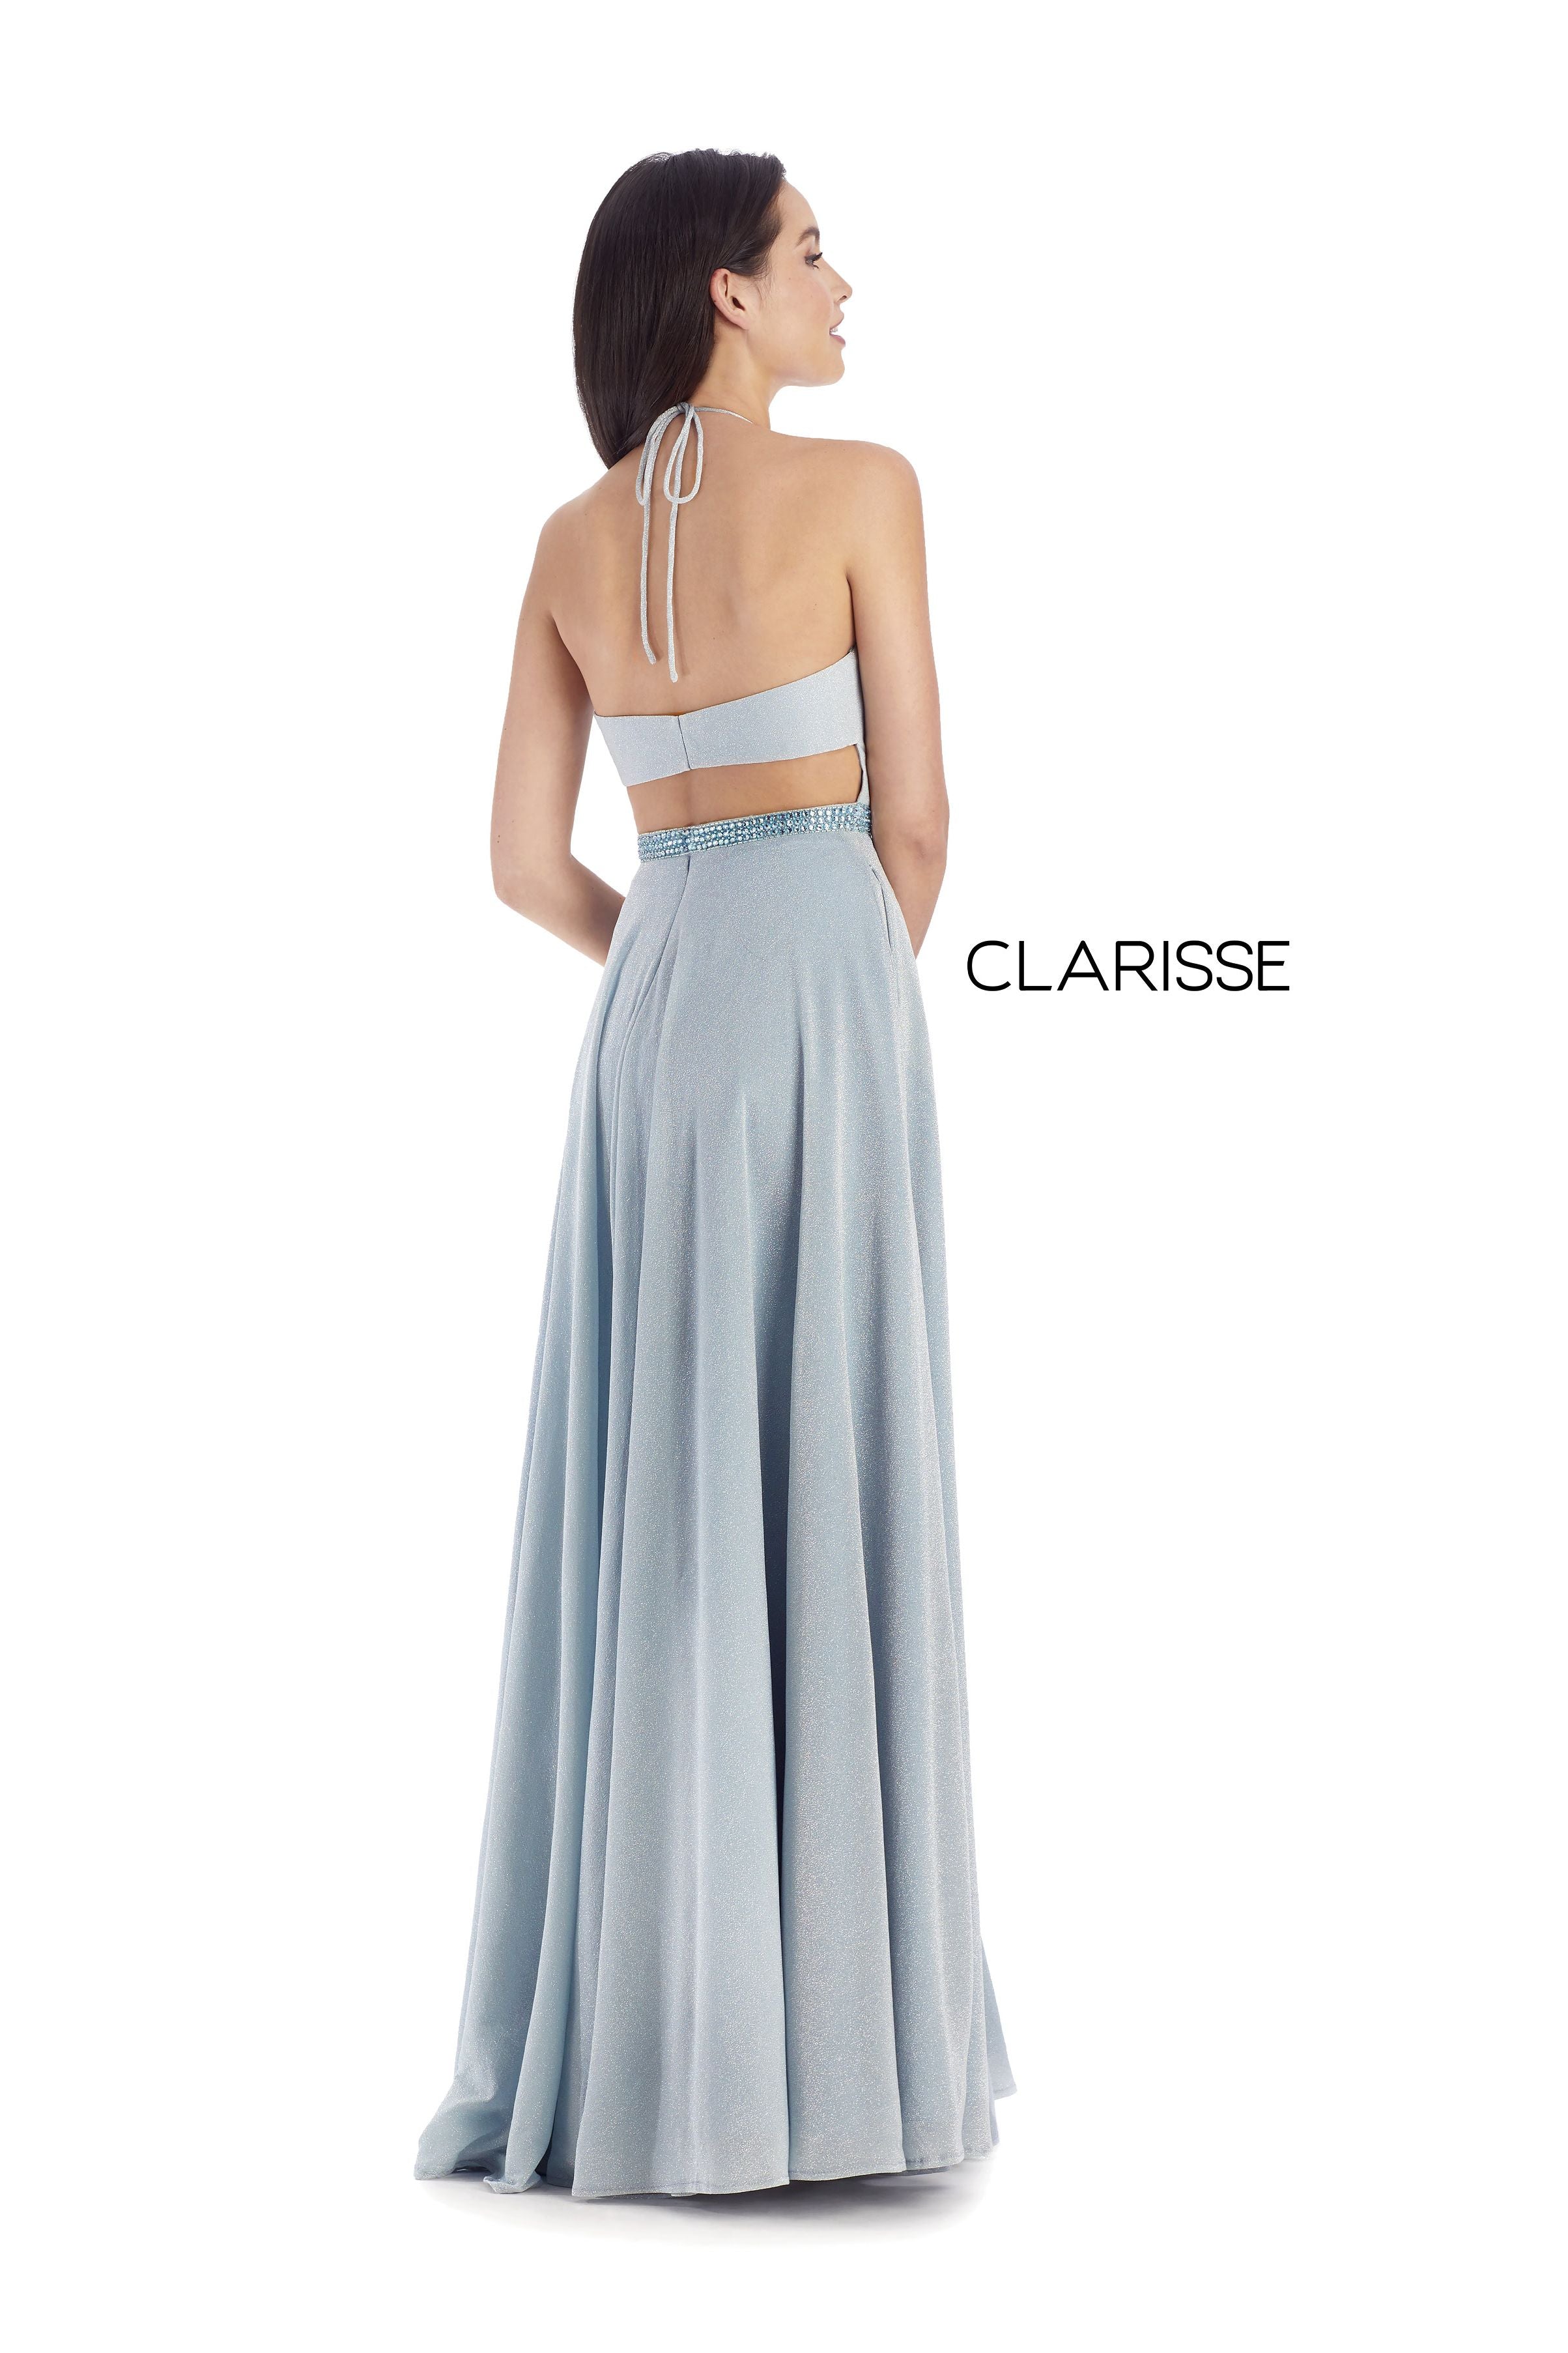 Clarisse -8051 Halter Neck A-Line Prom Dress